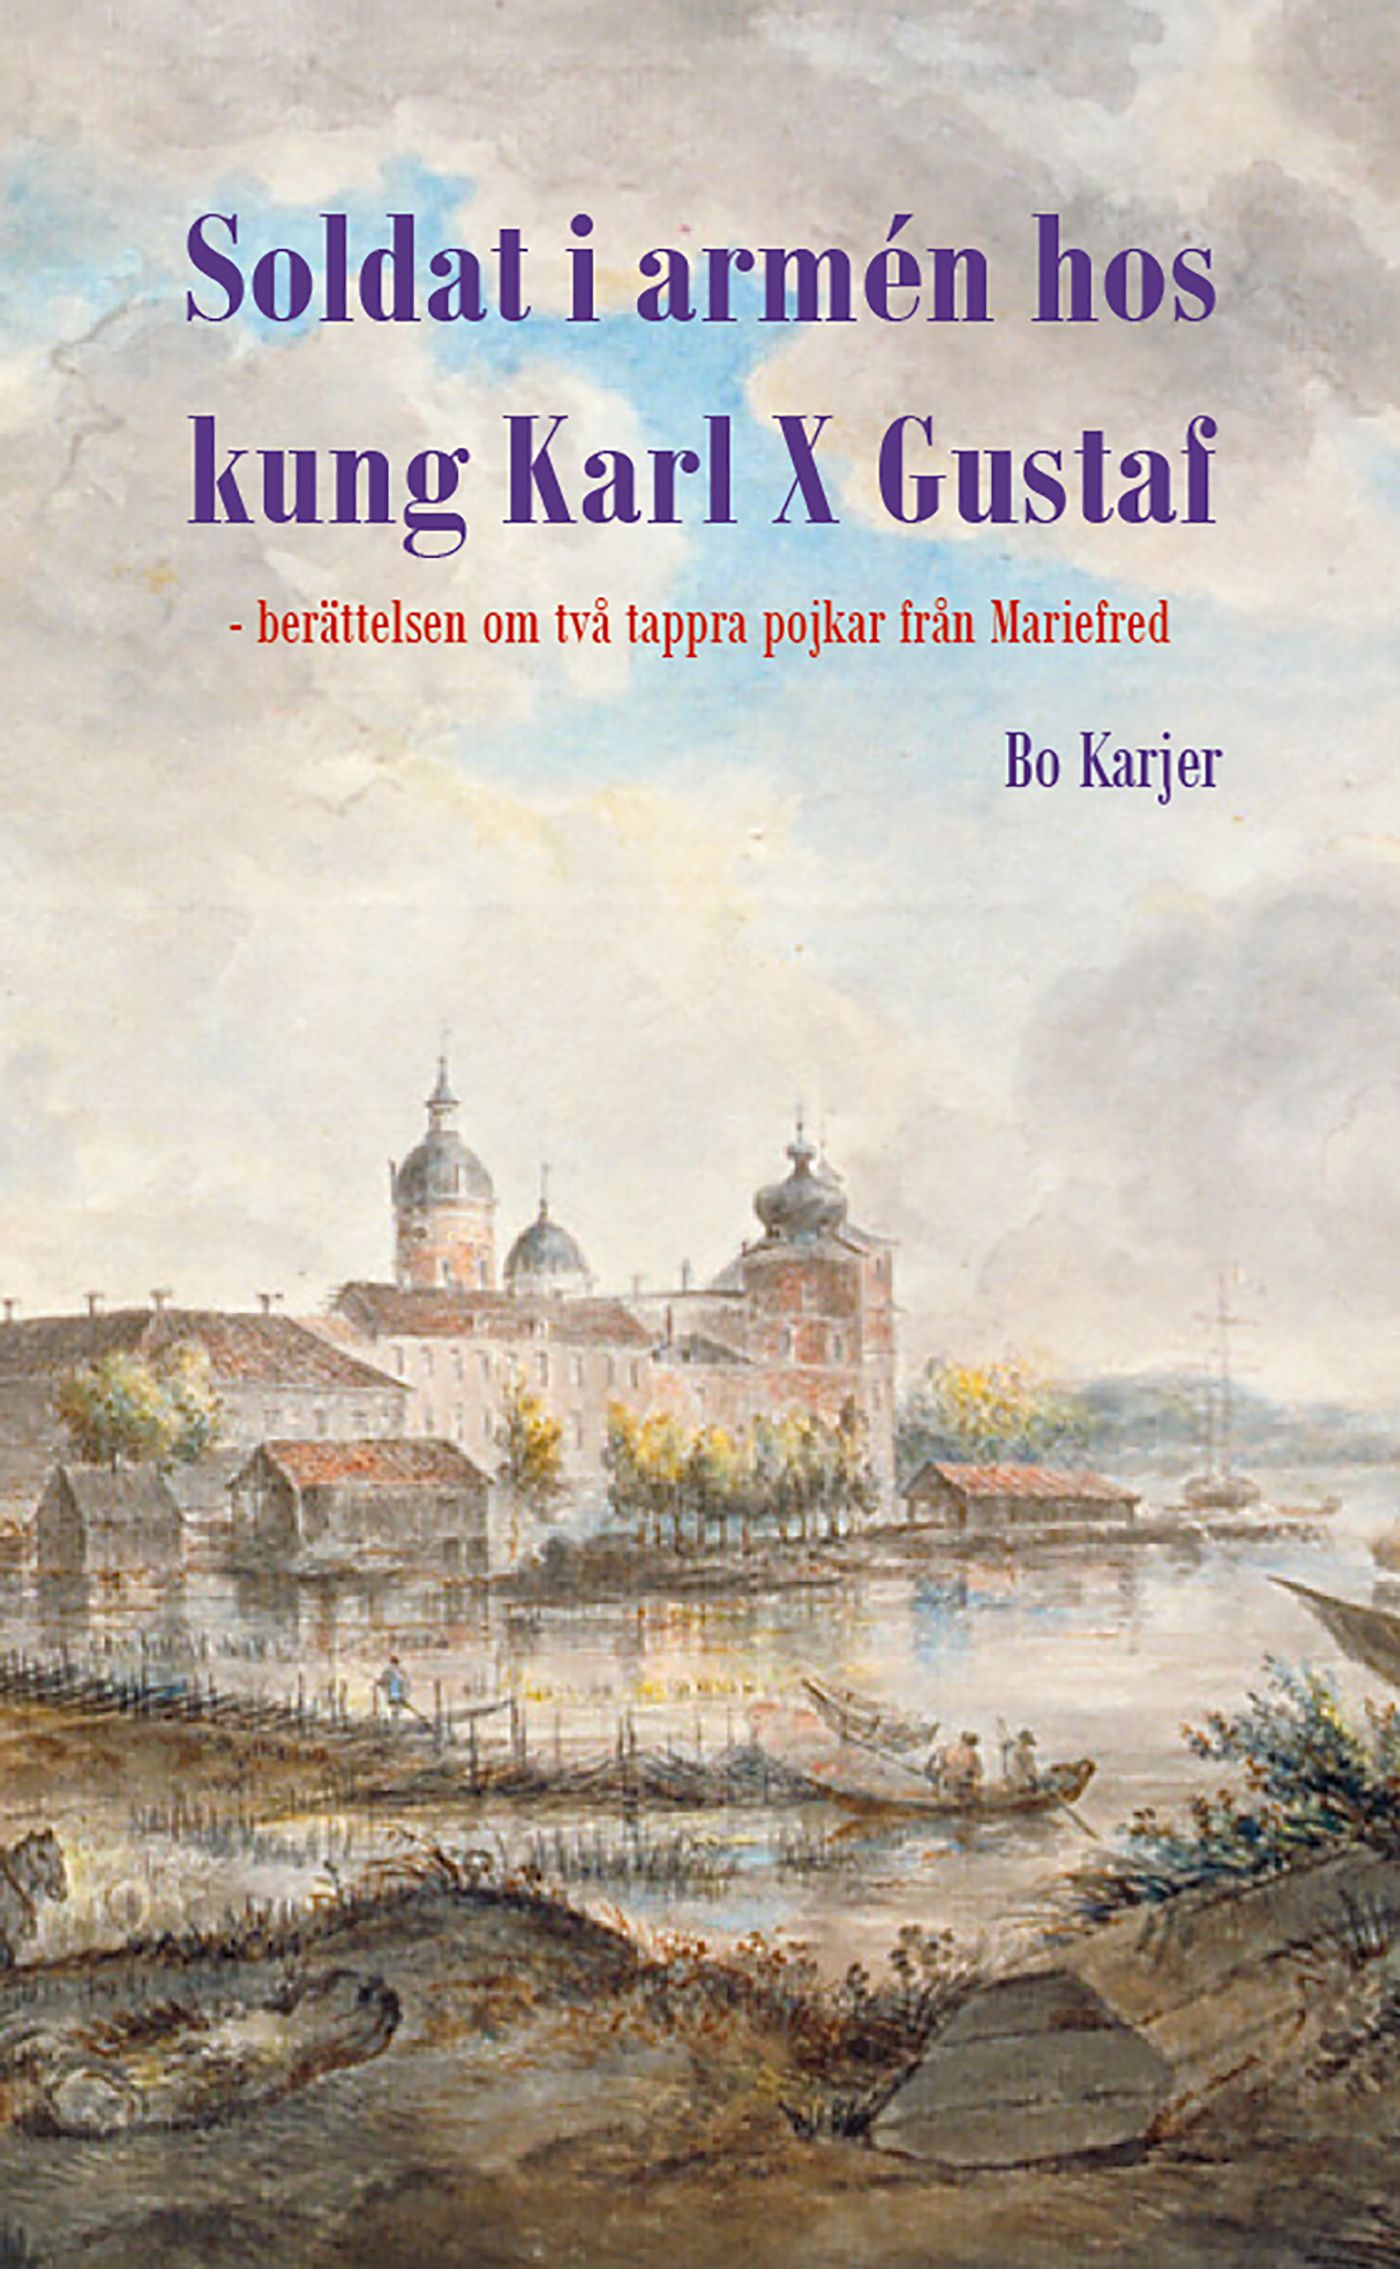 Soldat i armén hos kung Karl X Gustaf, e-bok av Bo Karjer